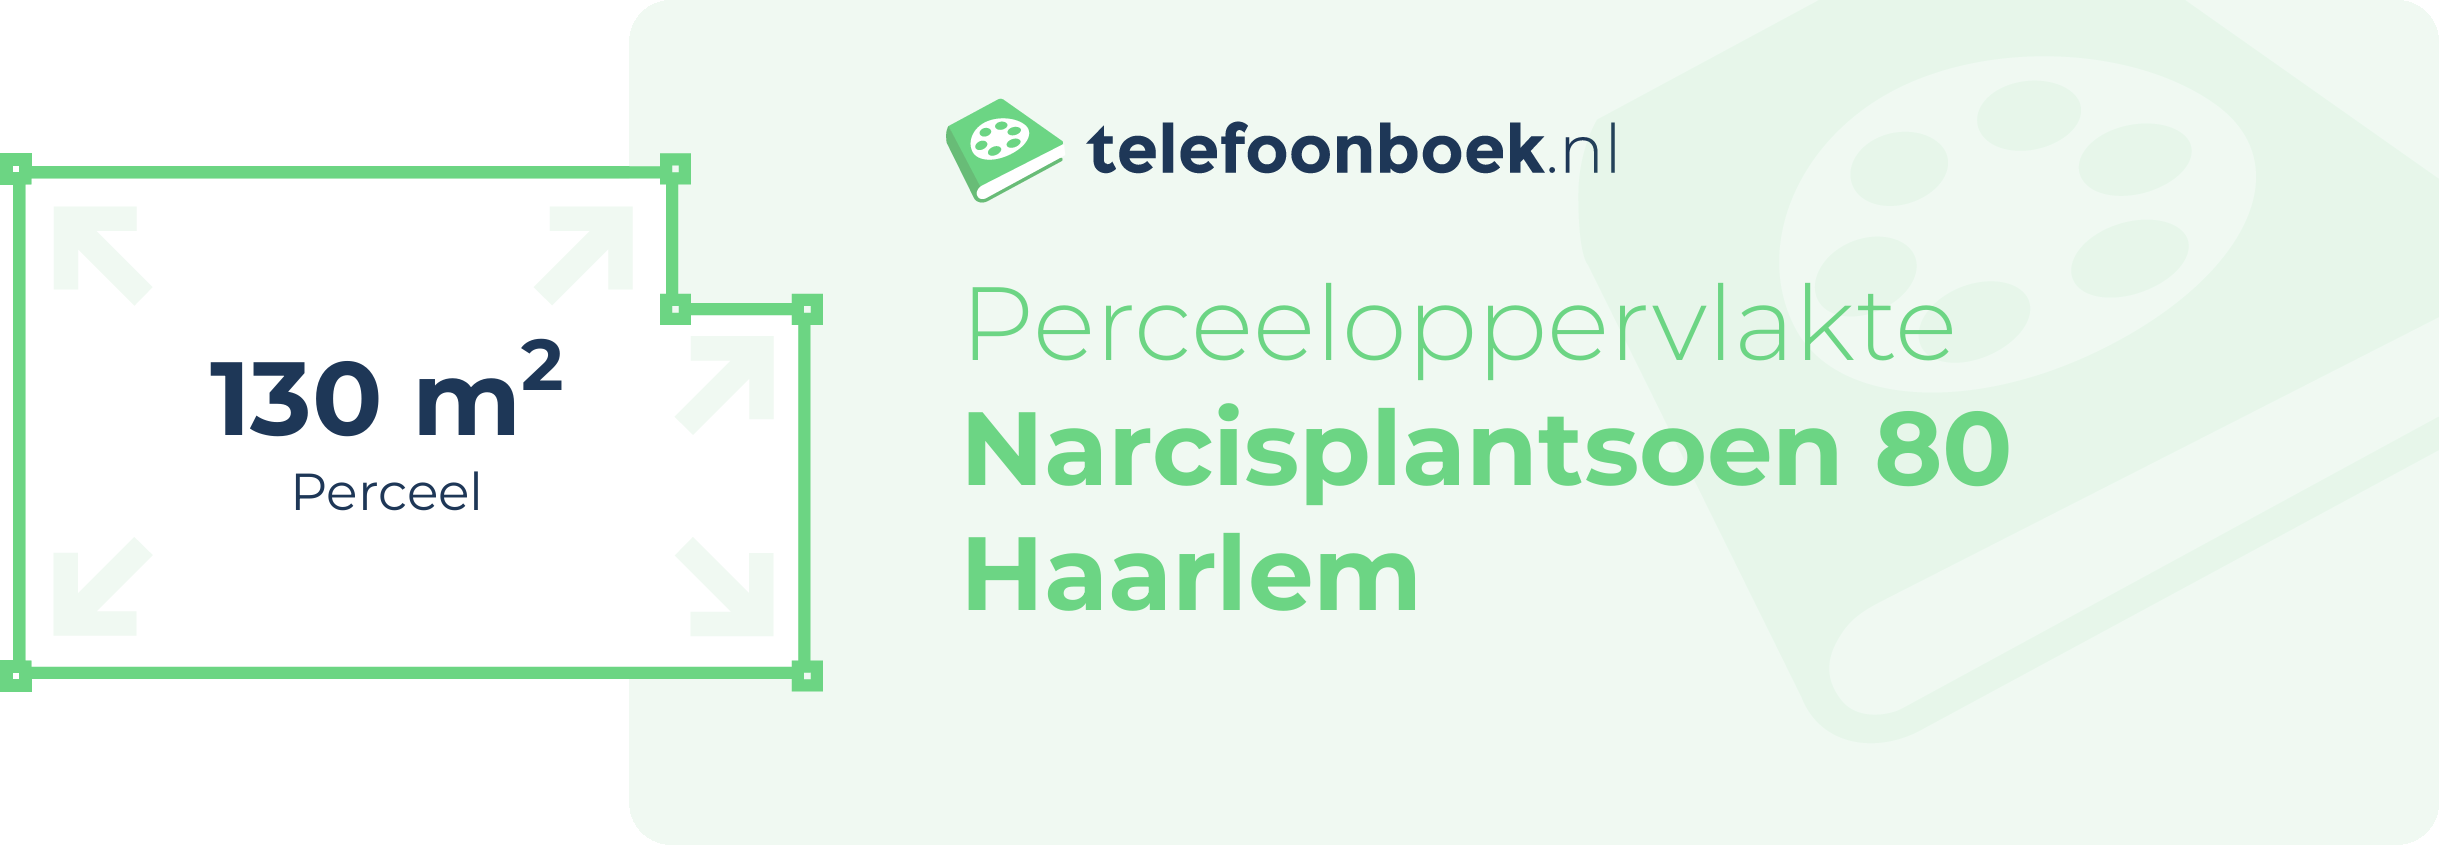 Perceeloppervlakte Narcisplantsoen 80 Haarlem